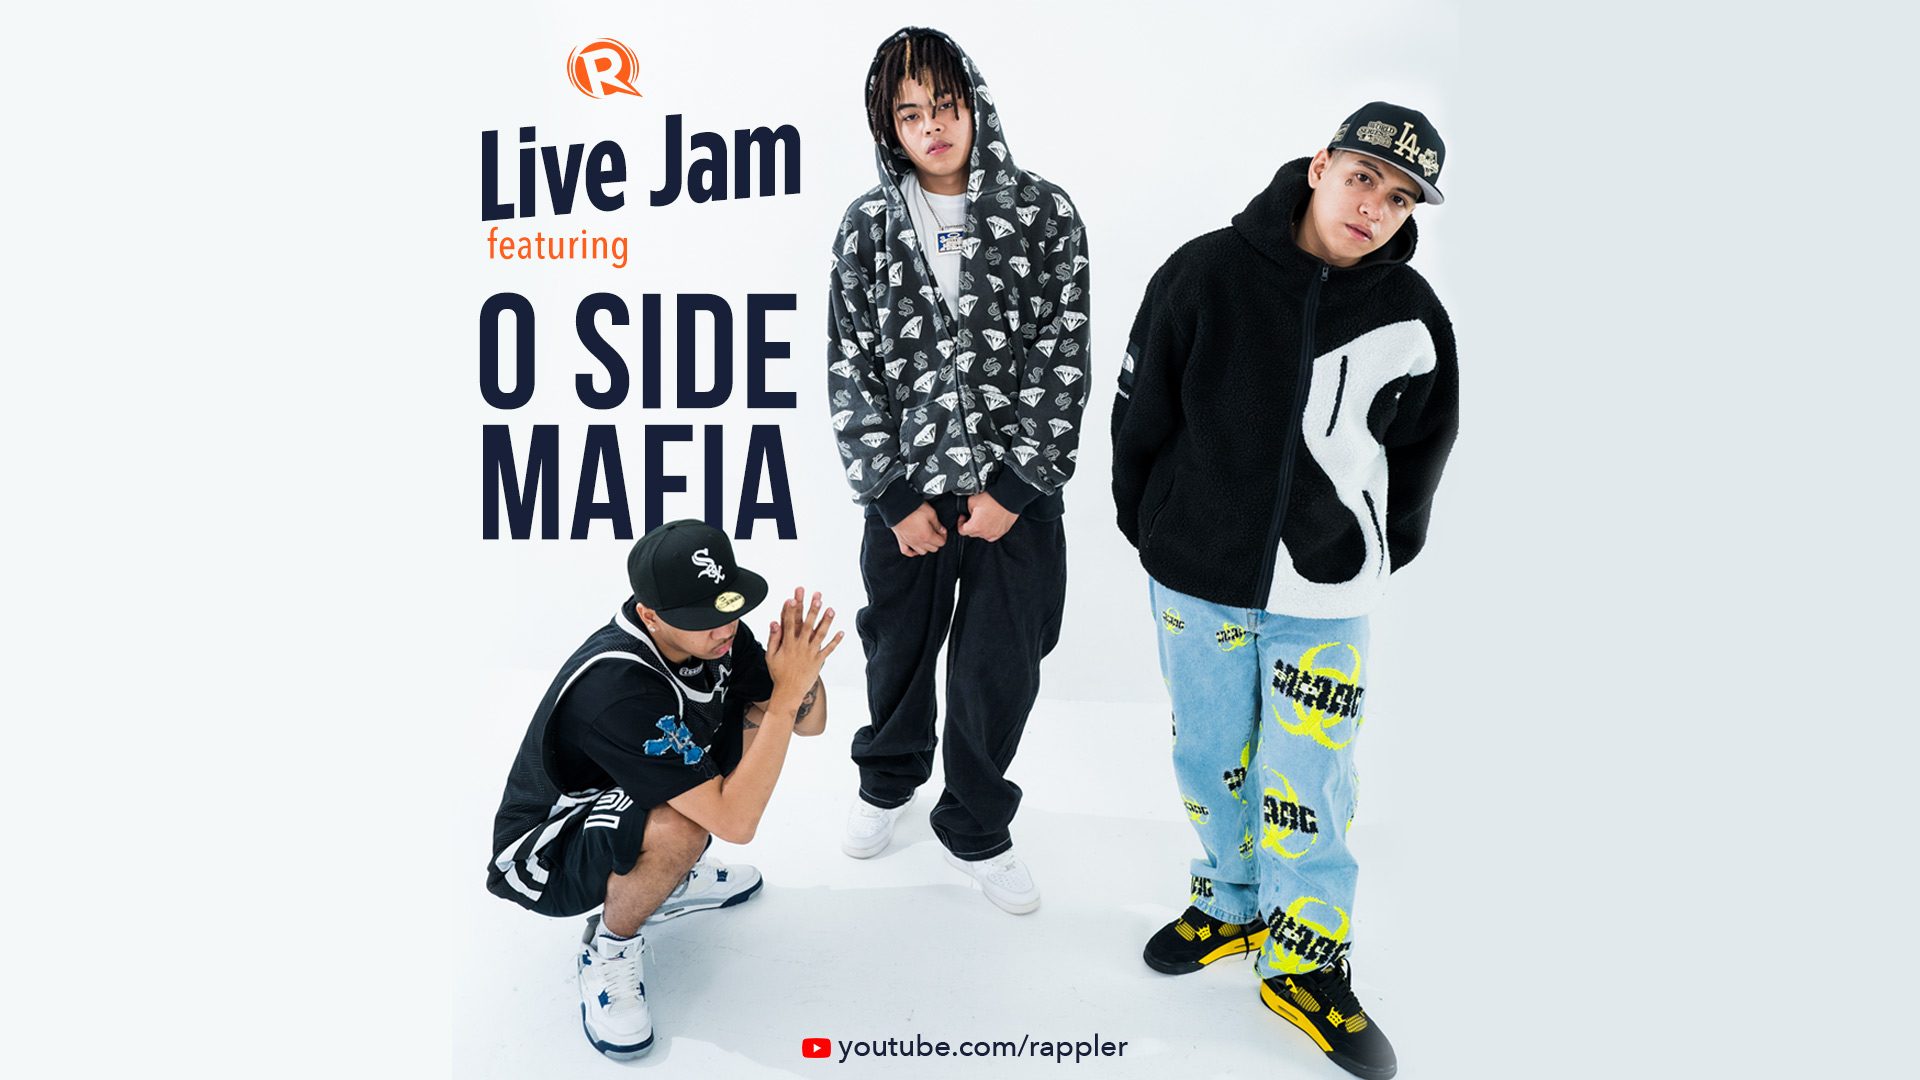 [WATCH] Rappler Live Jam: O SIDE MAFIA